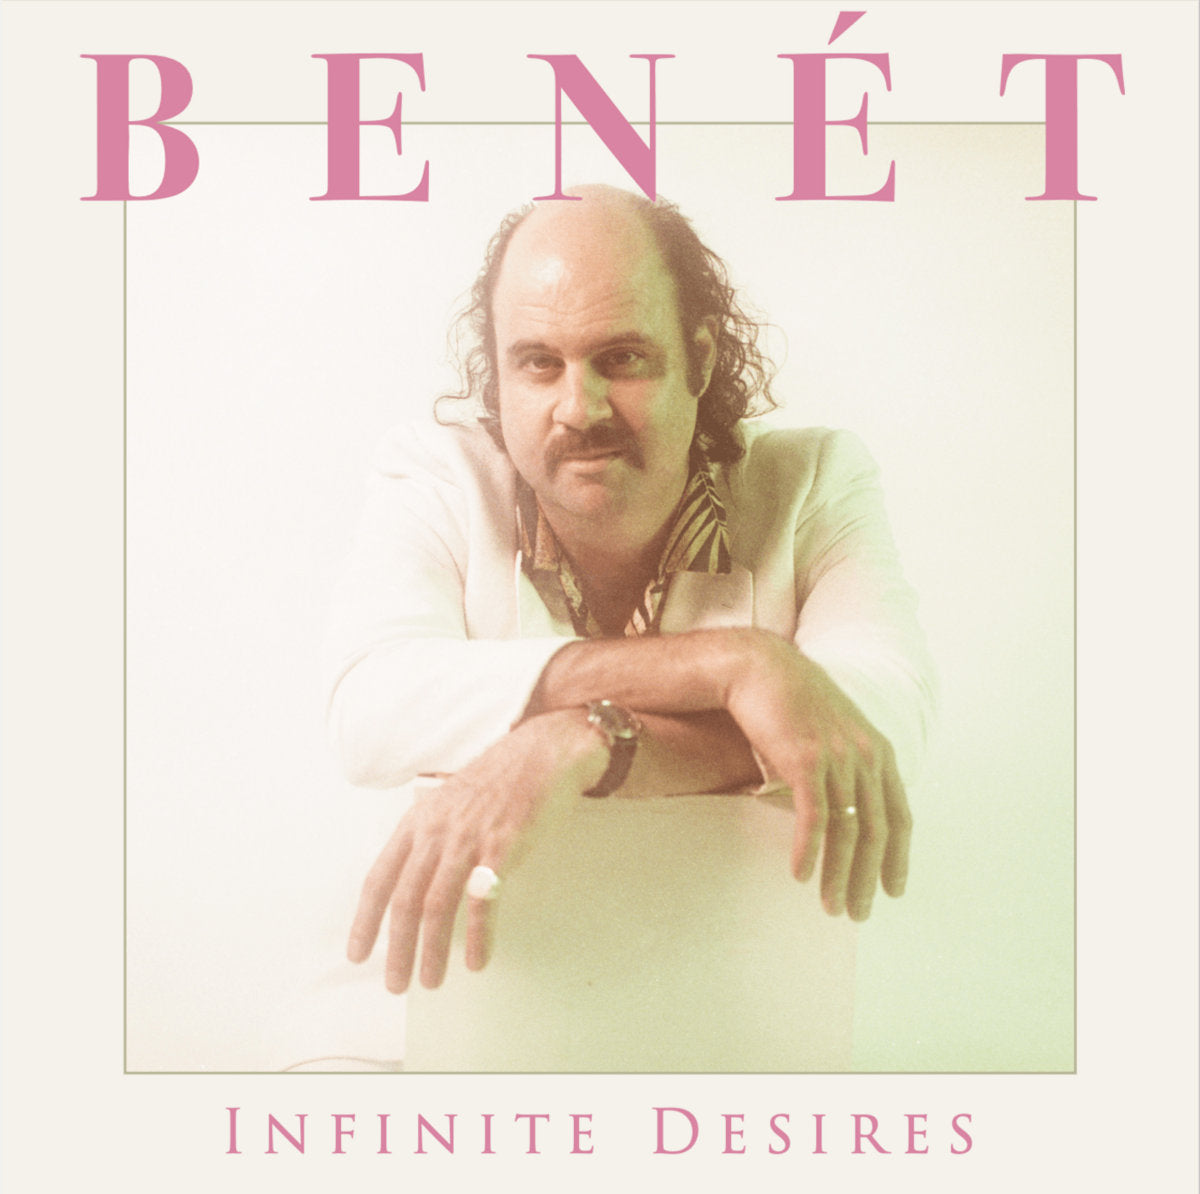 Infinite Desires by Donny Benet on Donnyland Records